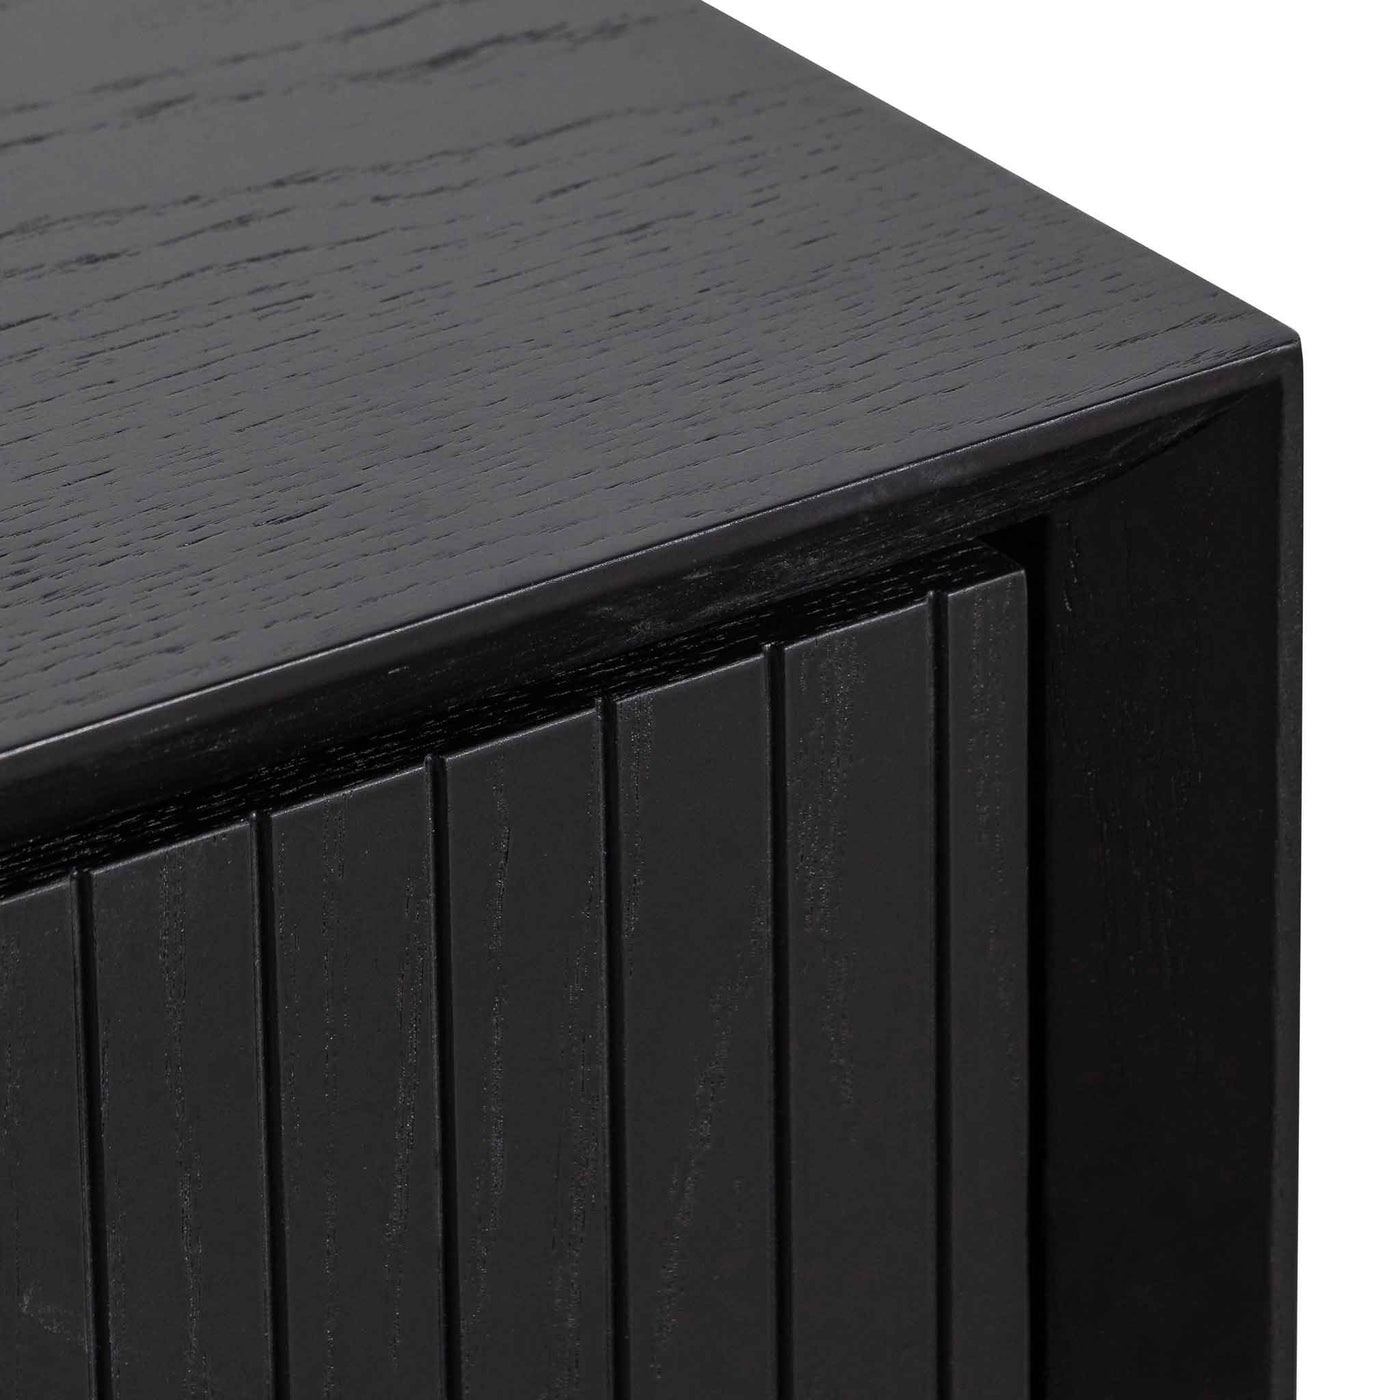 1.8m Console Table - Black